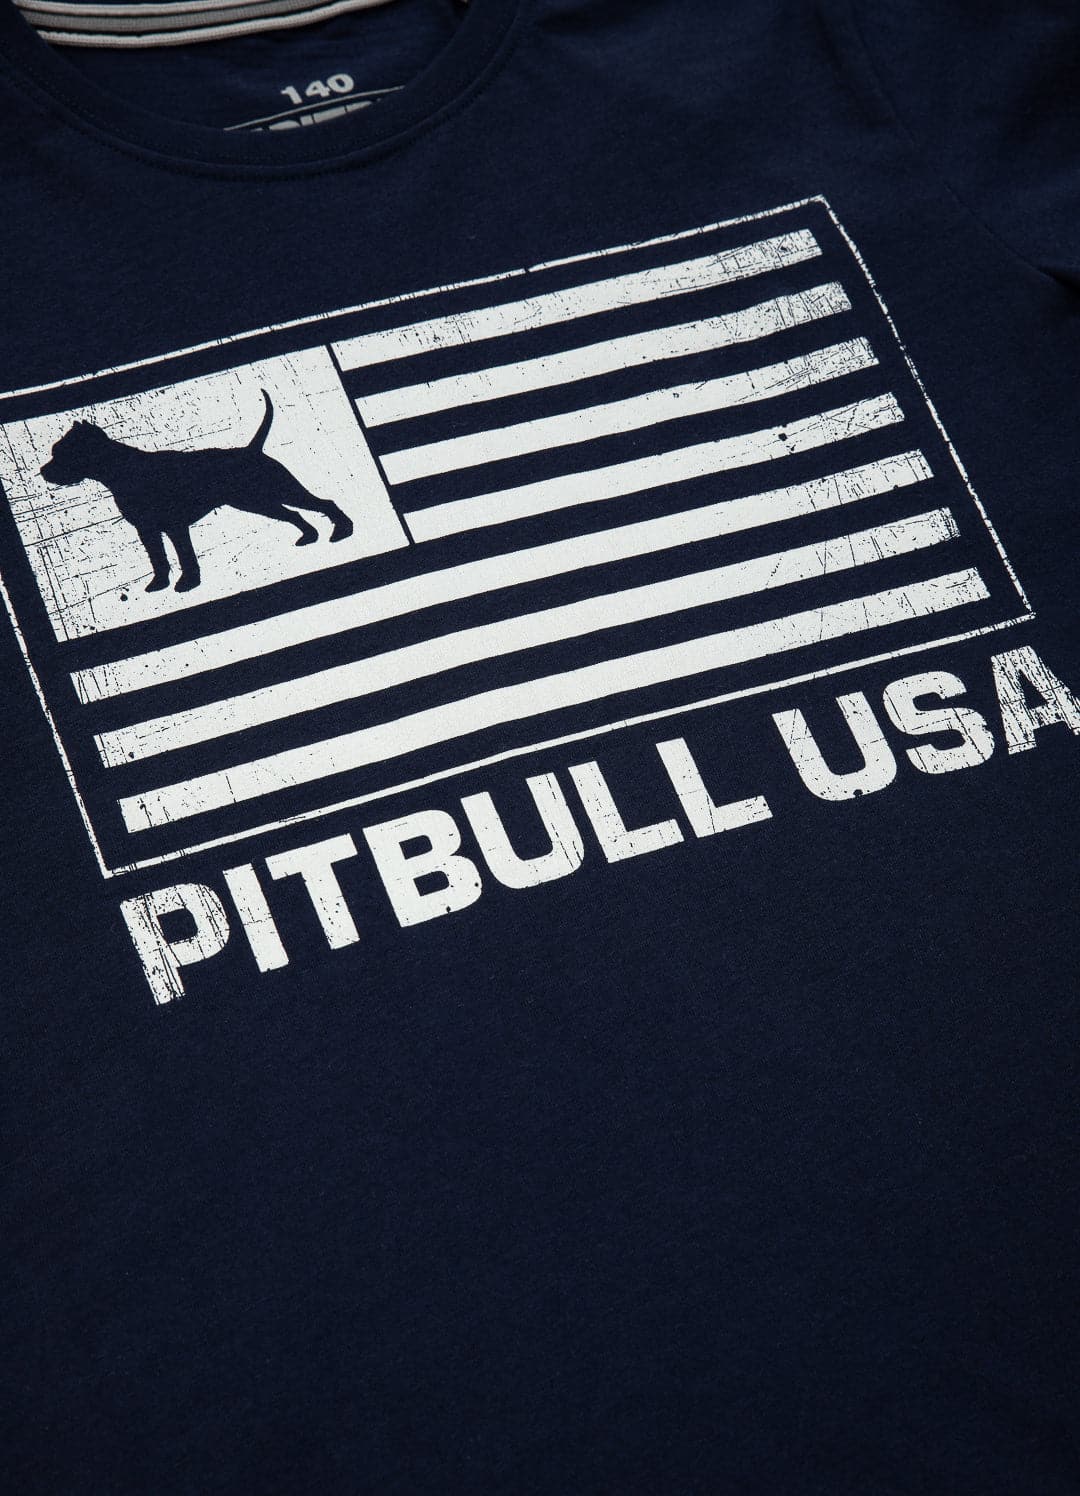 PITBULL USA kids dark navy t-shirt - Pitbull West Coast International Store 